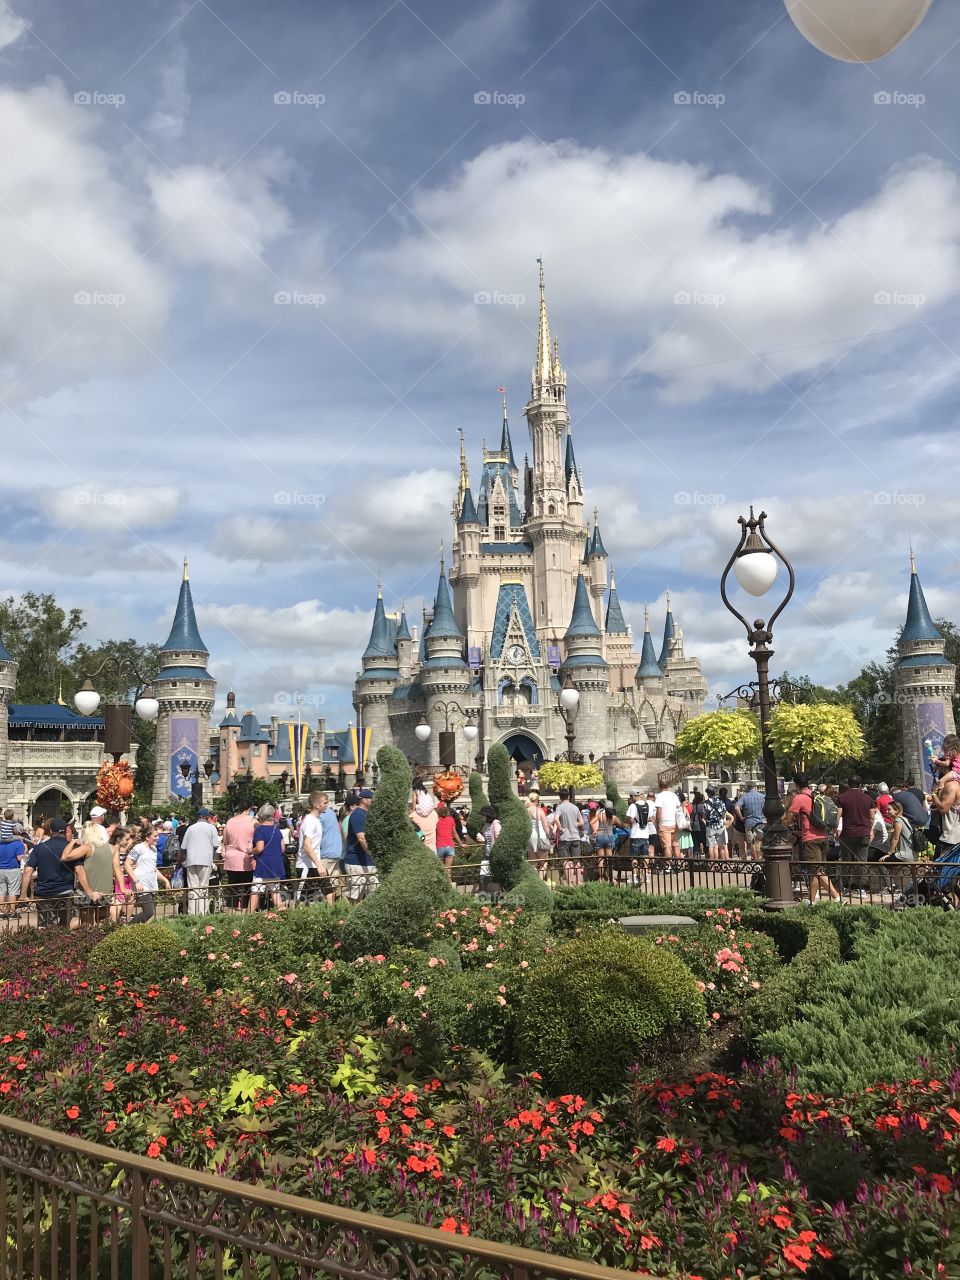 Fun at Disney world next to Cinderella Castle